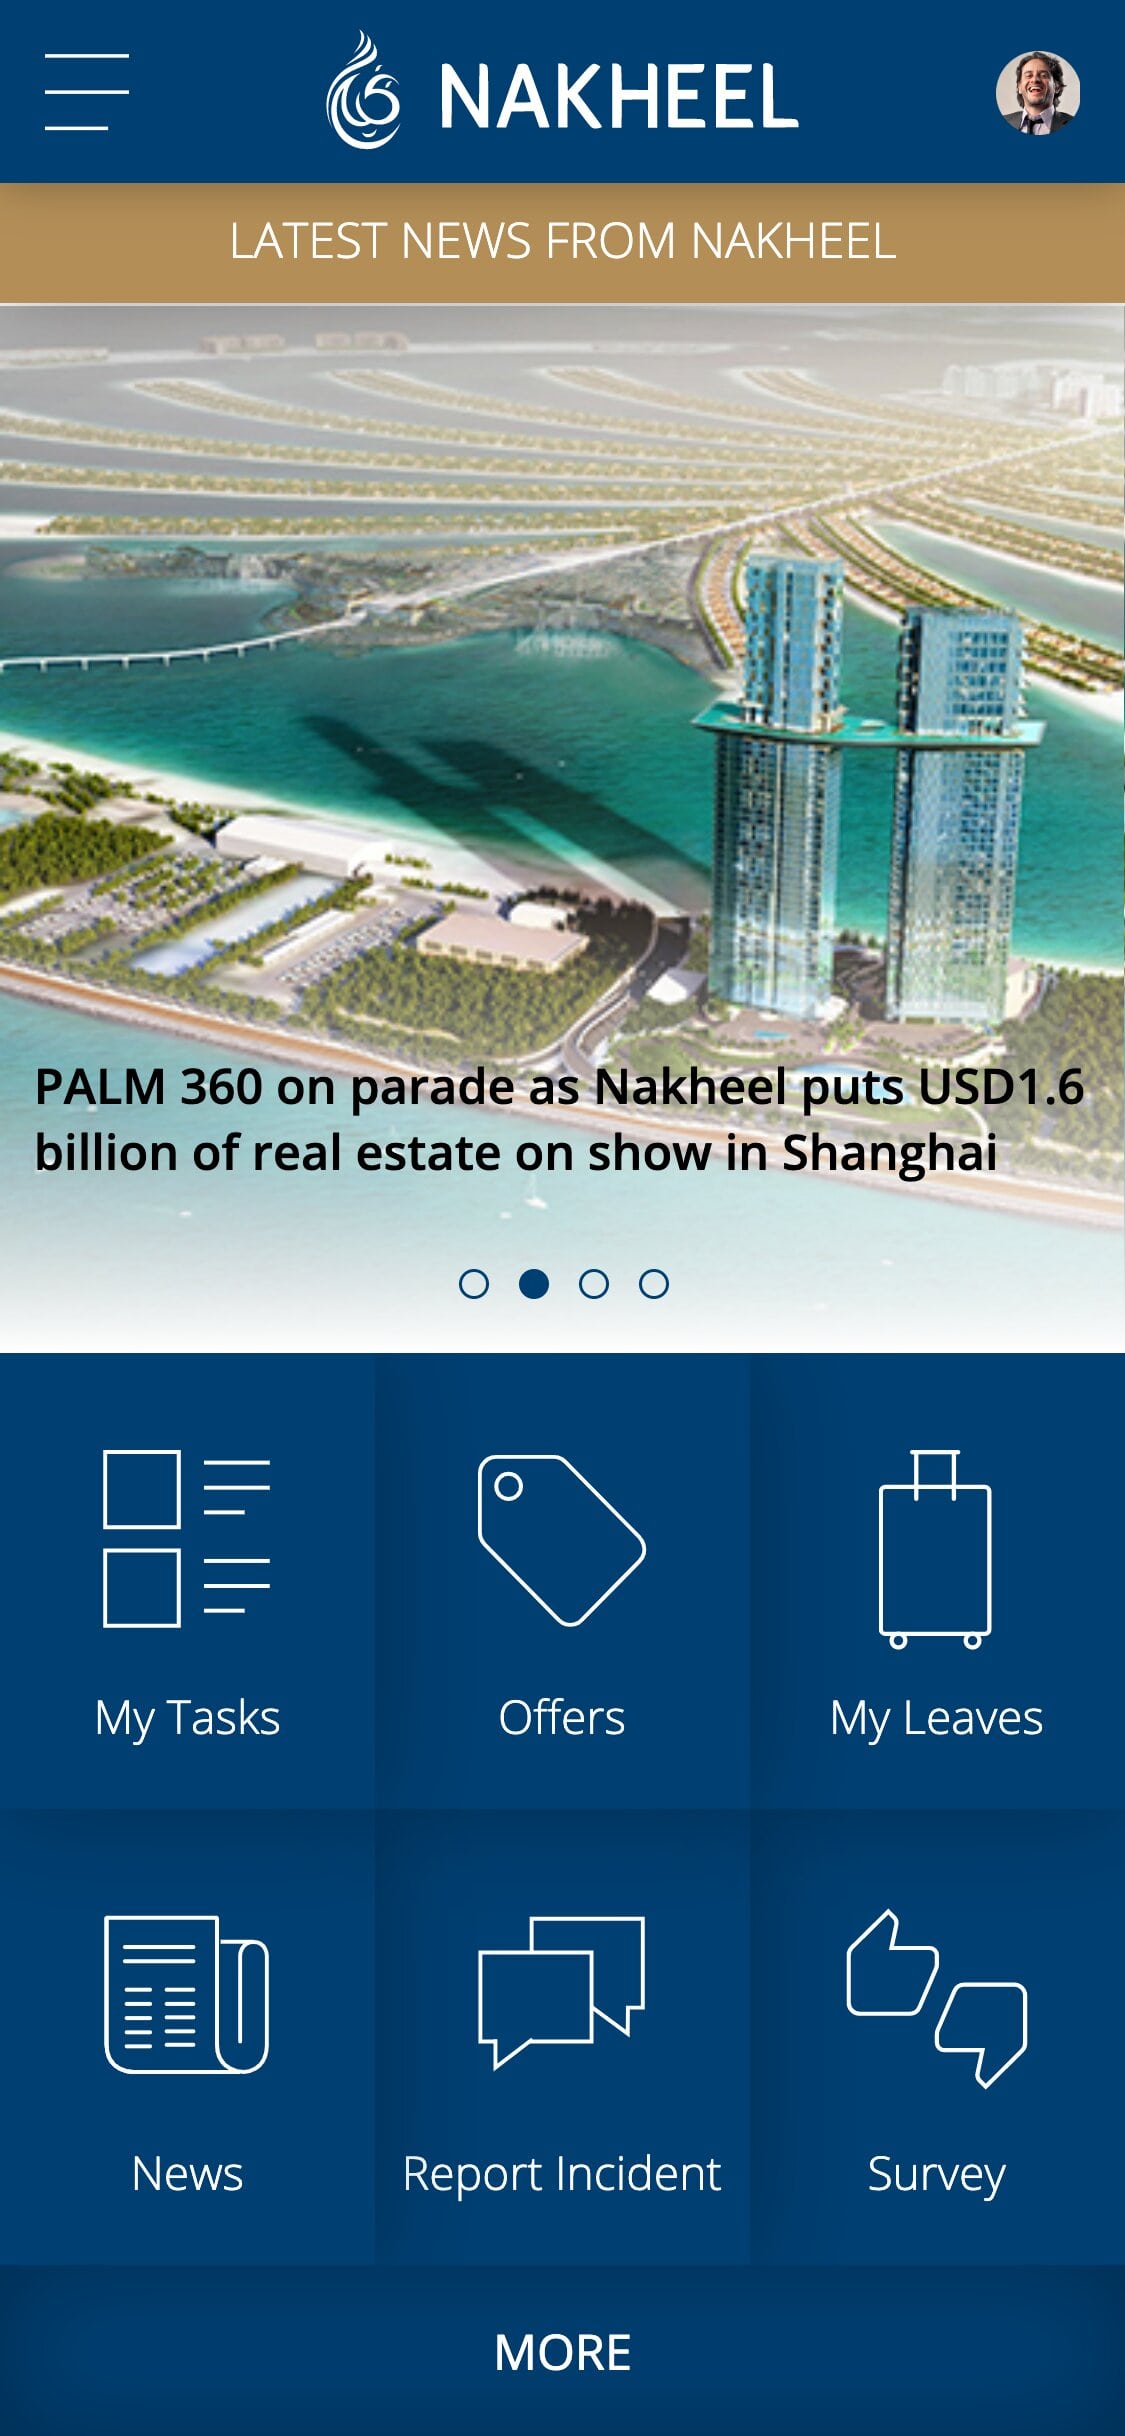 Landing - Nakheel Employee App